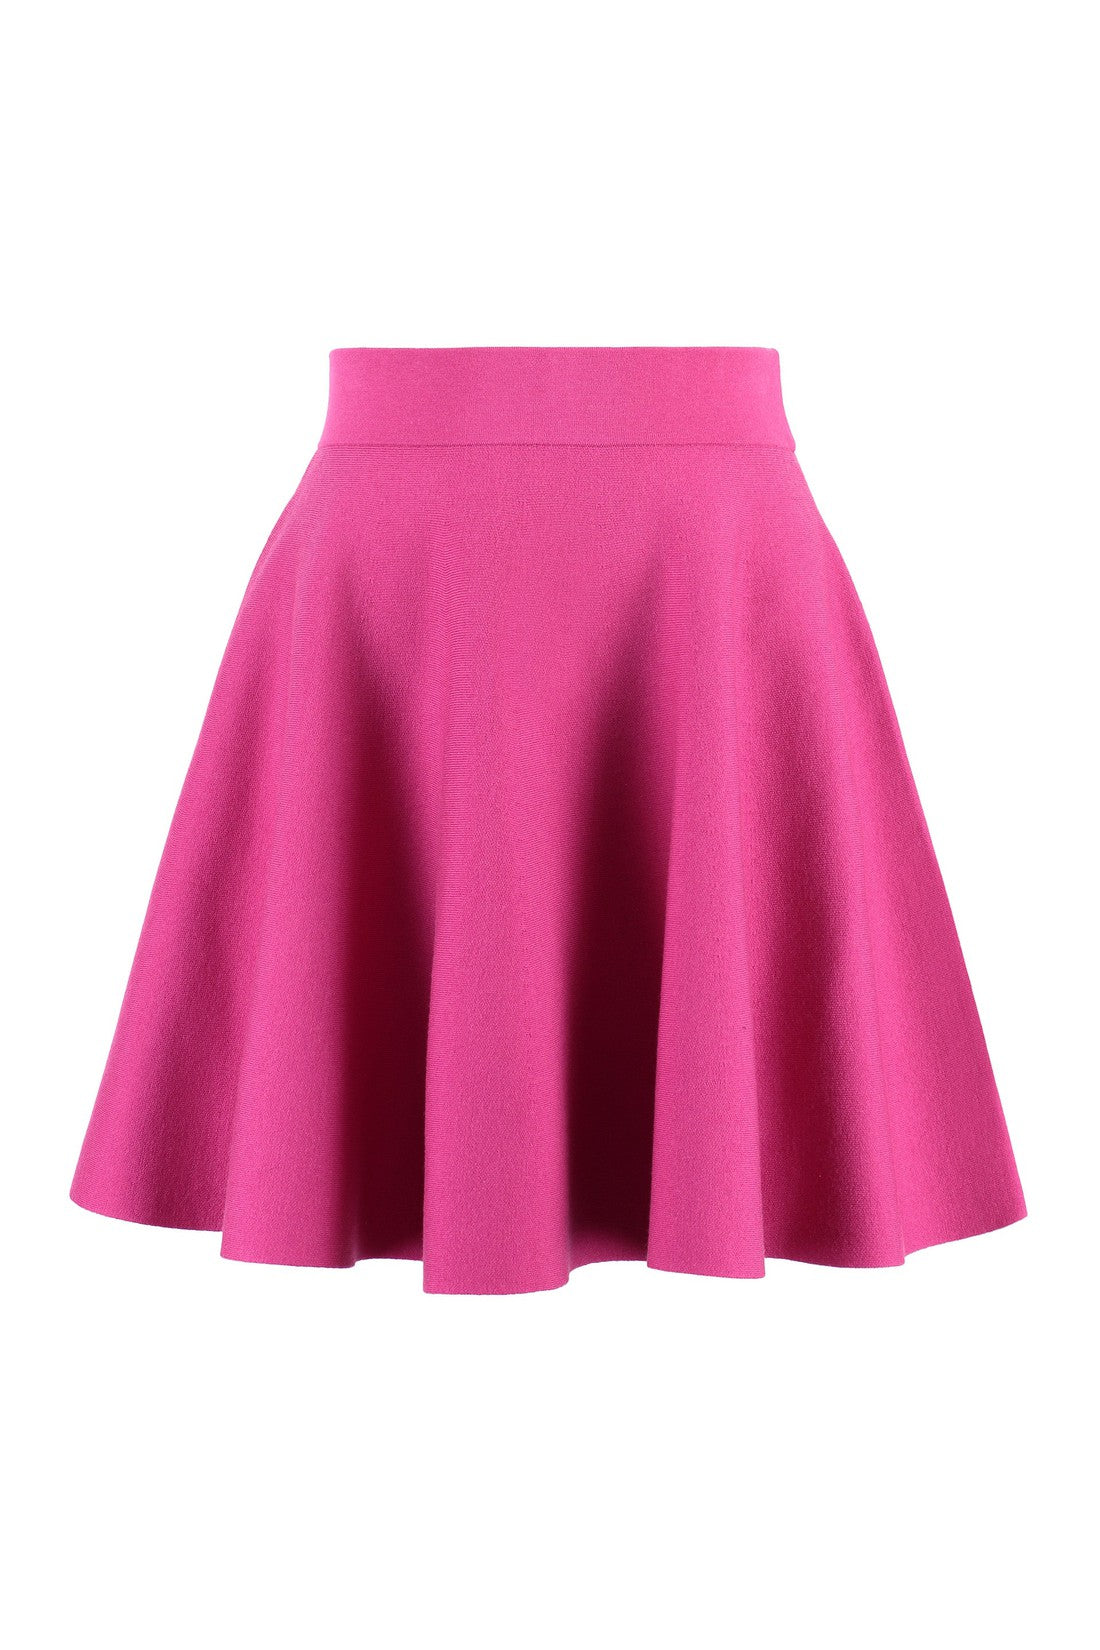 Nina Ricci-OUTLET-SALE-Knitted mini skirt-ARCHIVIST